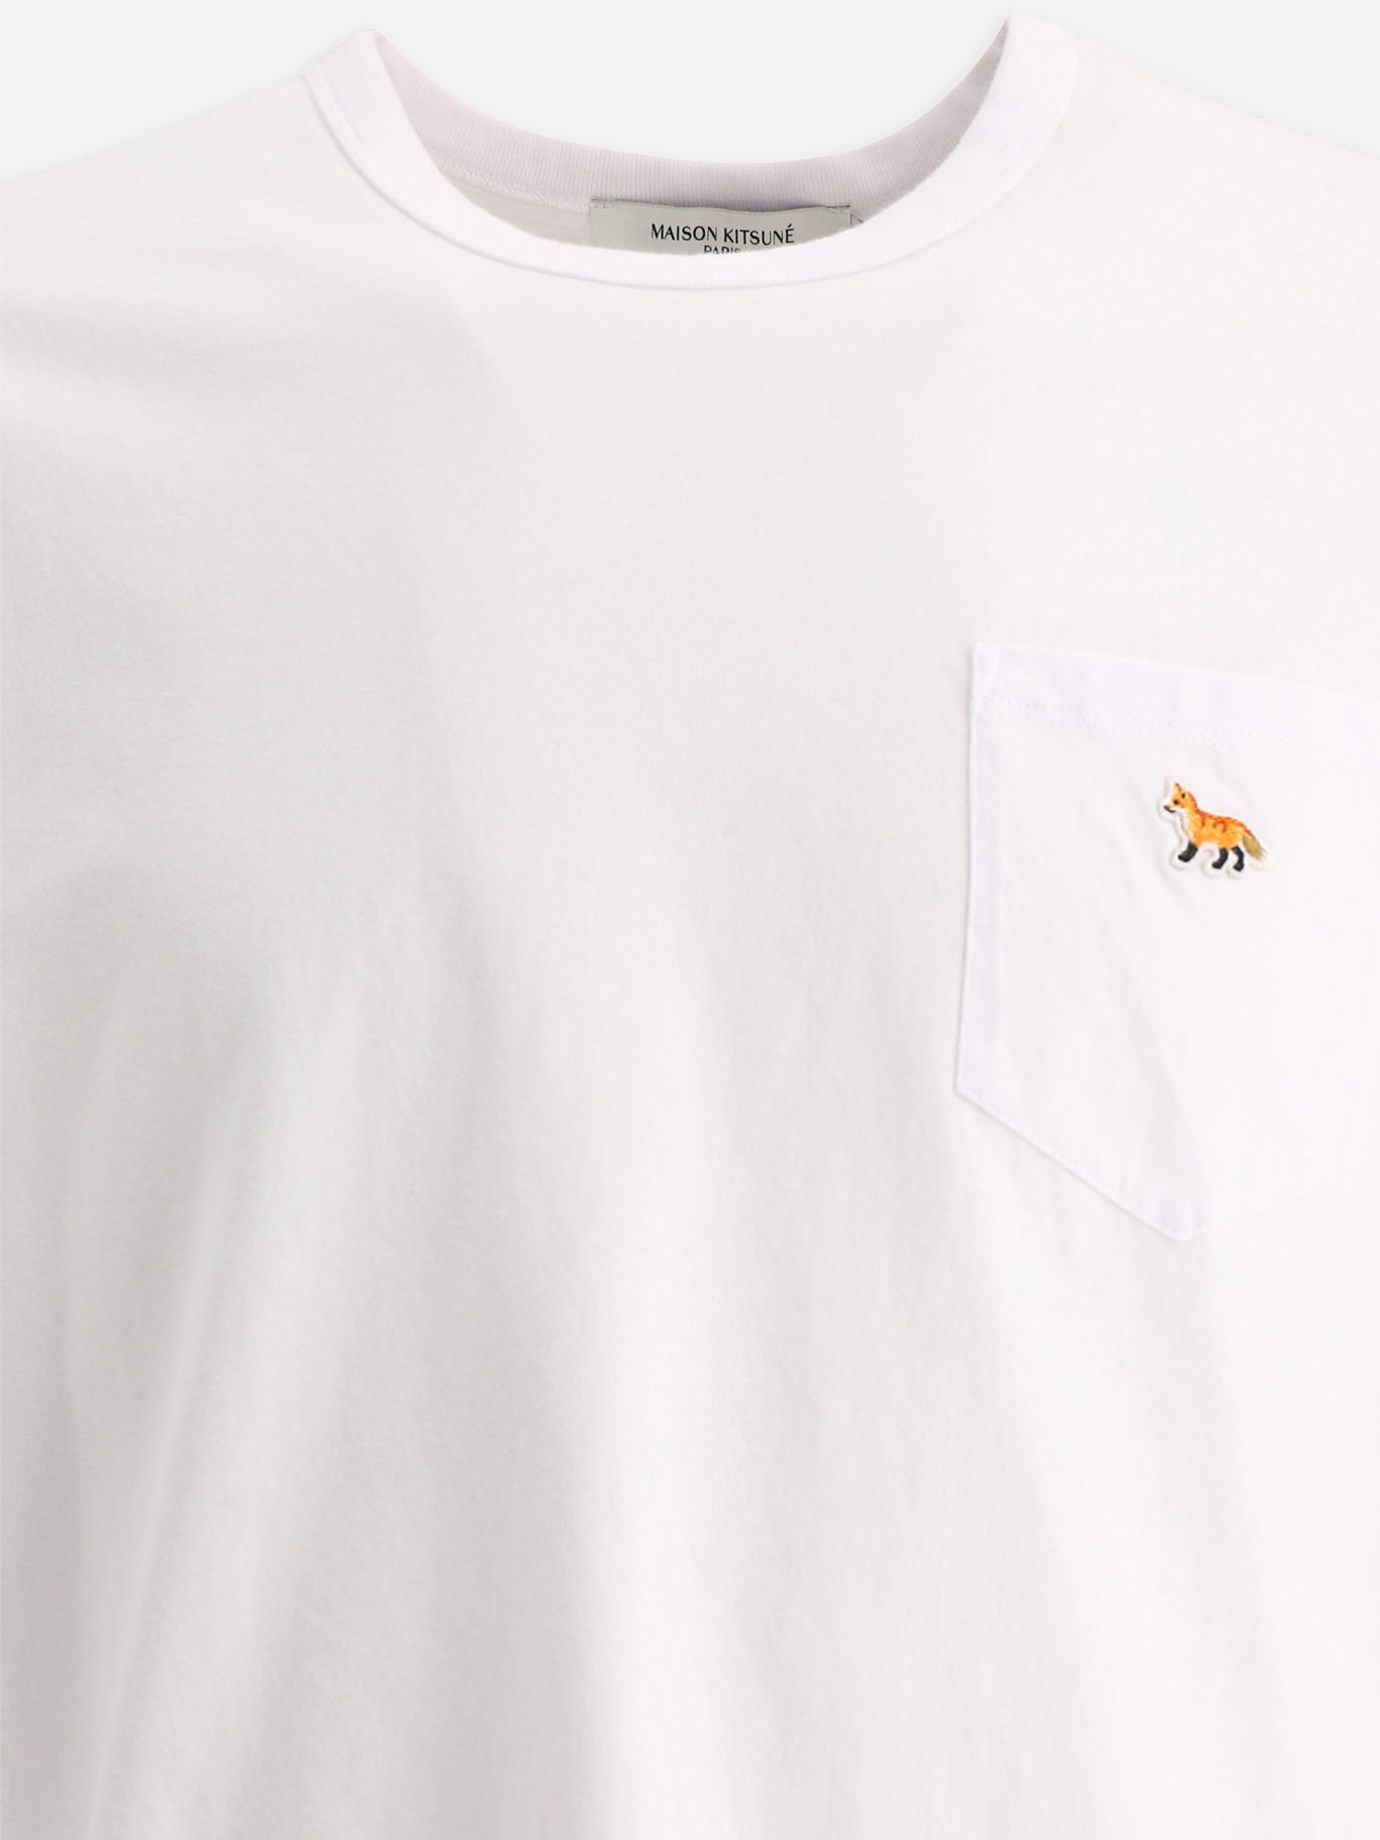  Profile Fox  t-shirt by Maison Kitsuné